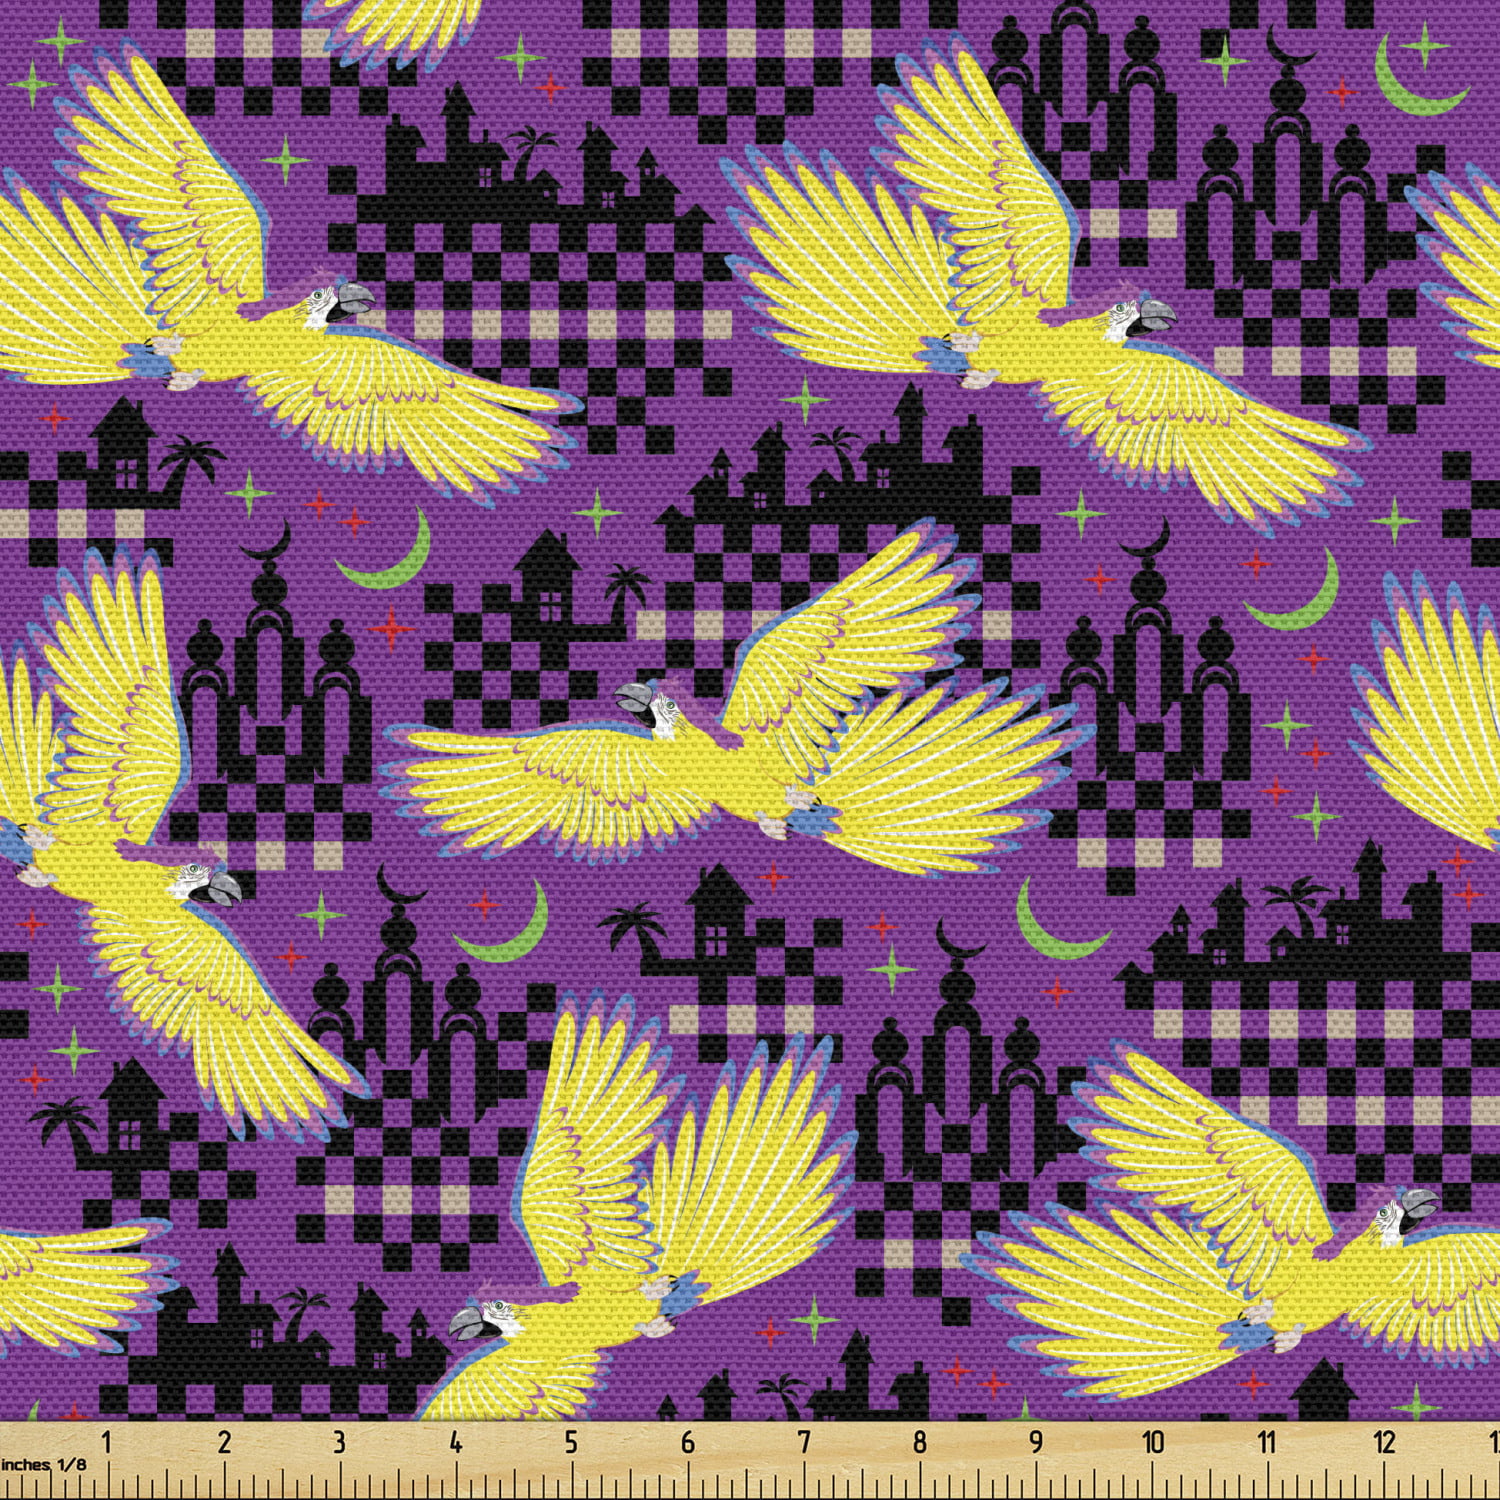 Macaw cross stitch pattern Modern cross stitch Geometric Bird Parrot Tropical nature